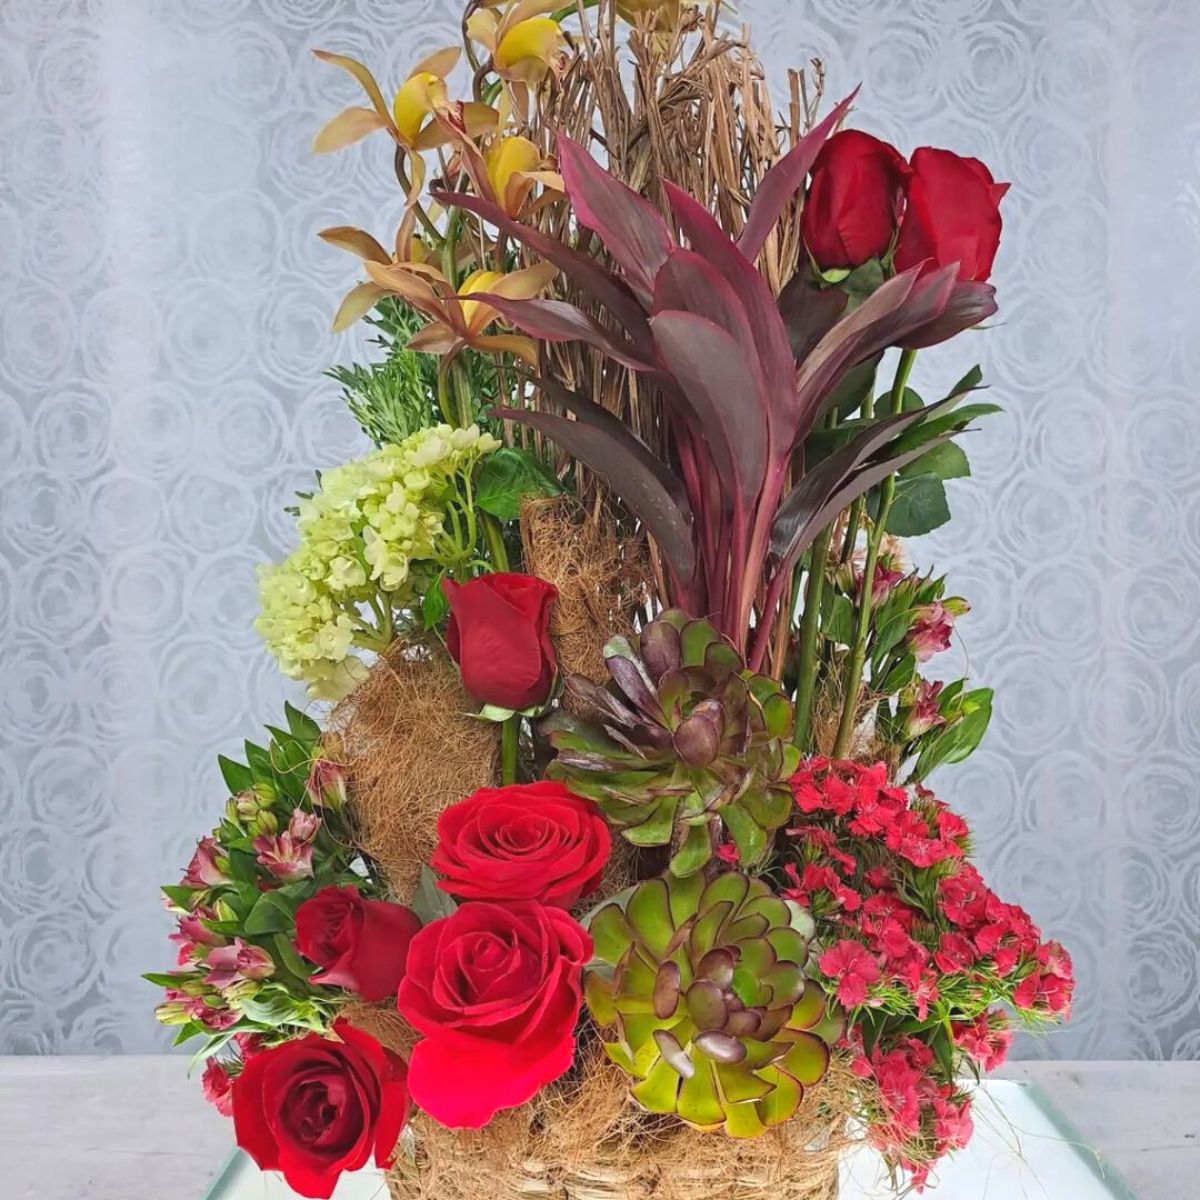 Floral arrangement created by Ivan Moreno